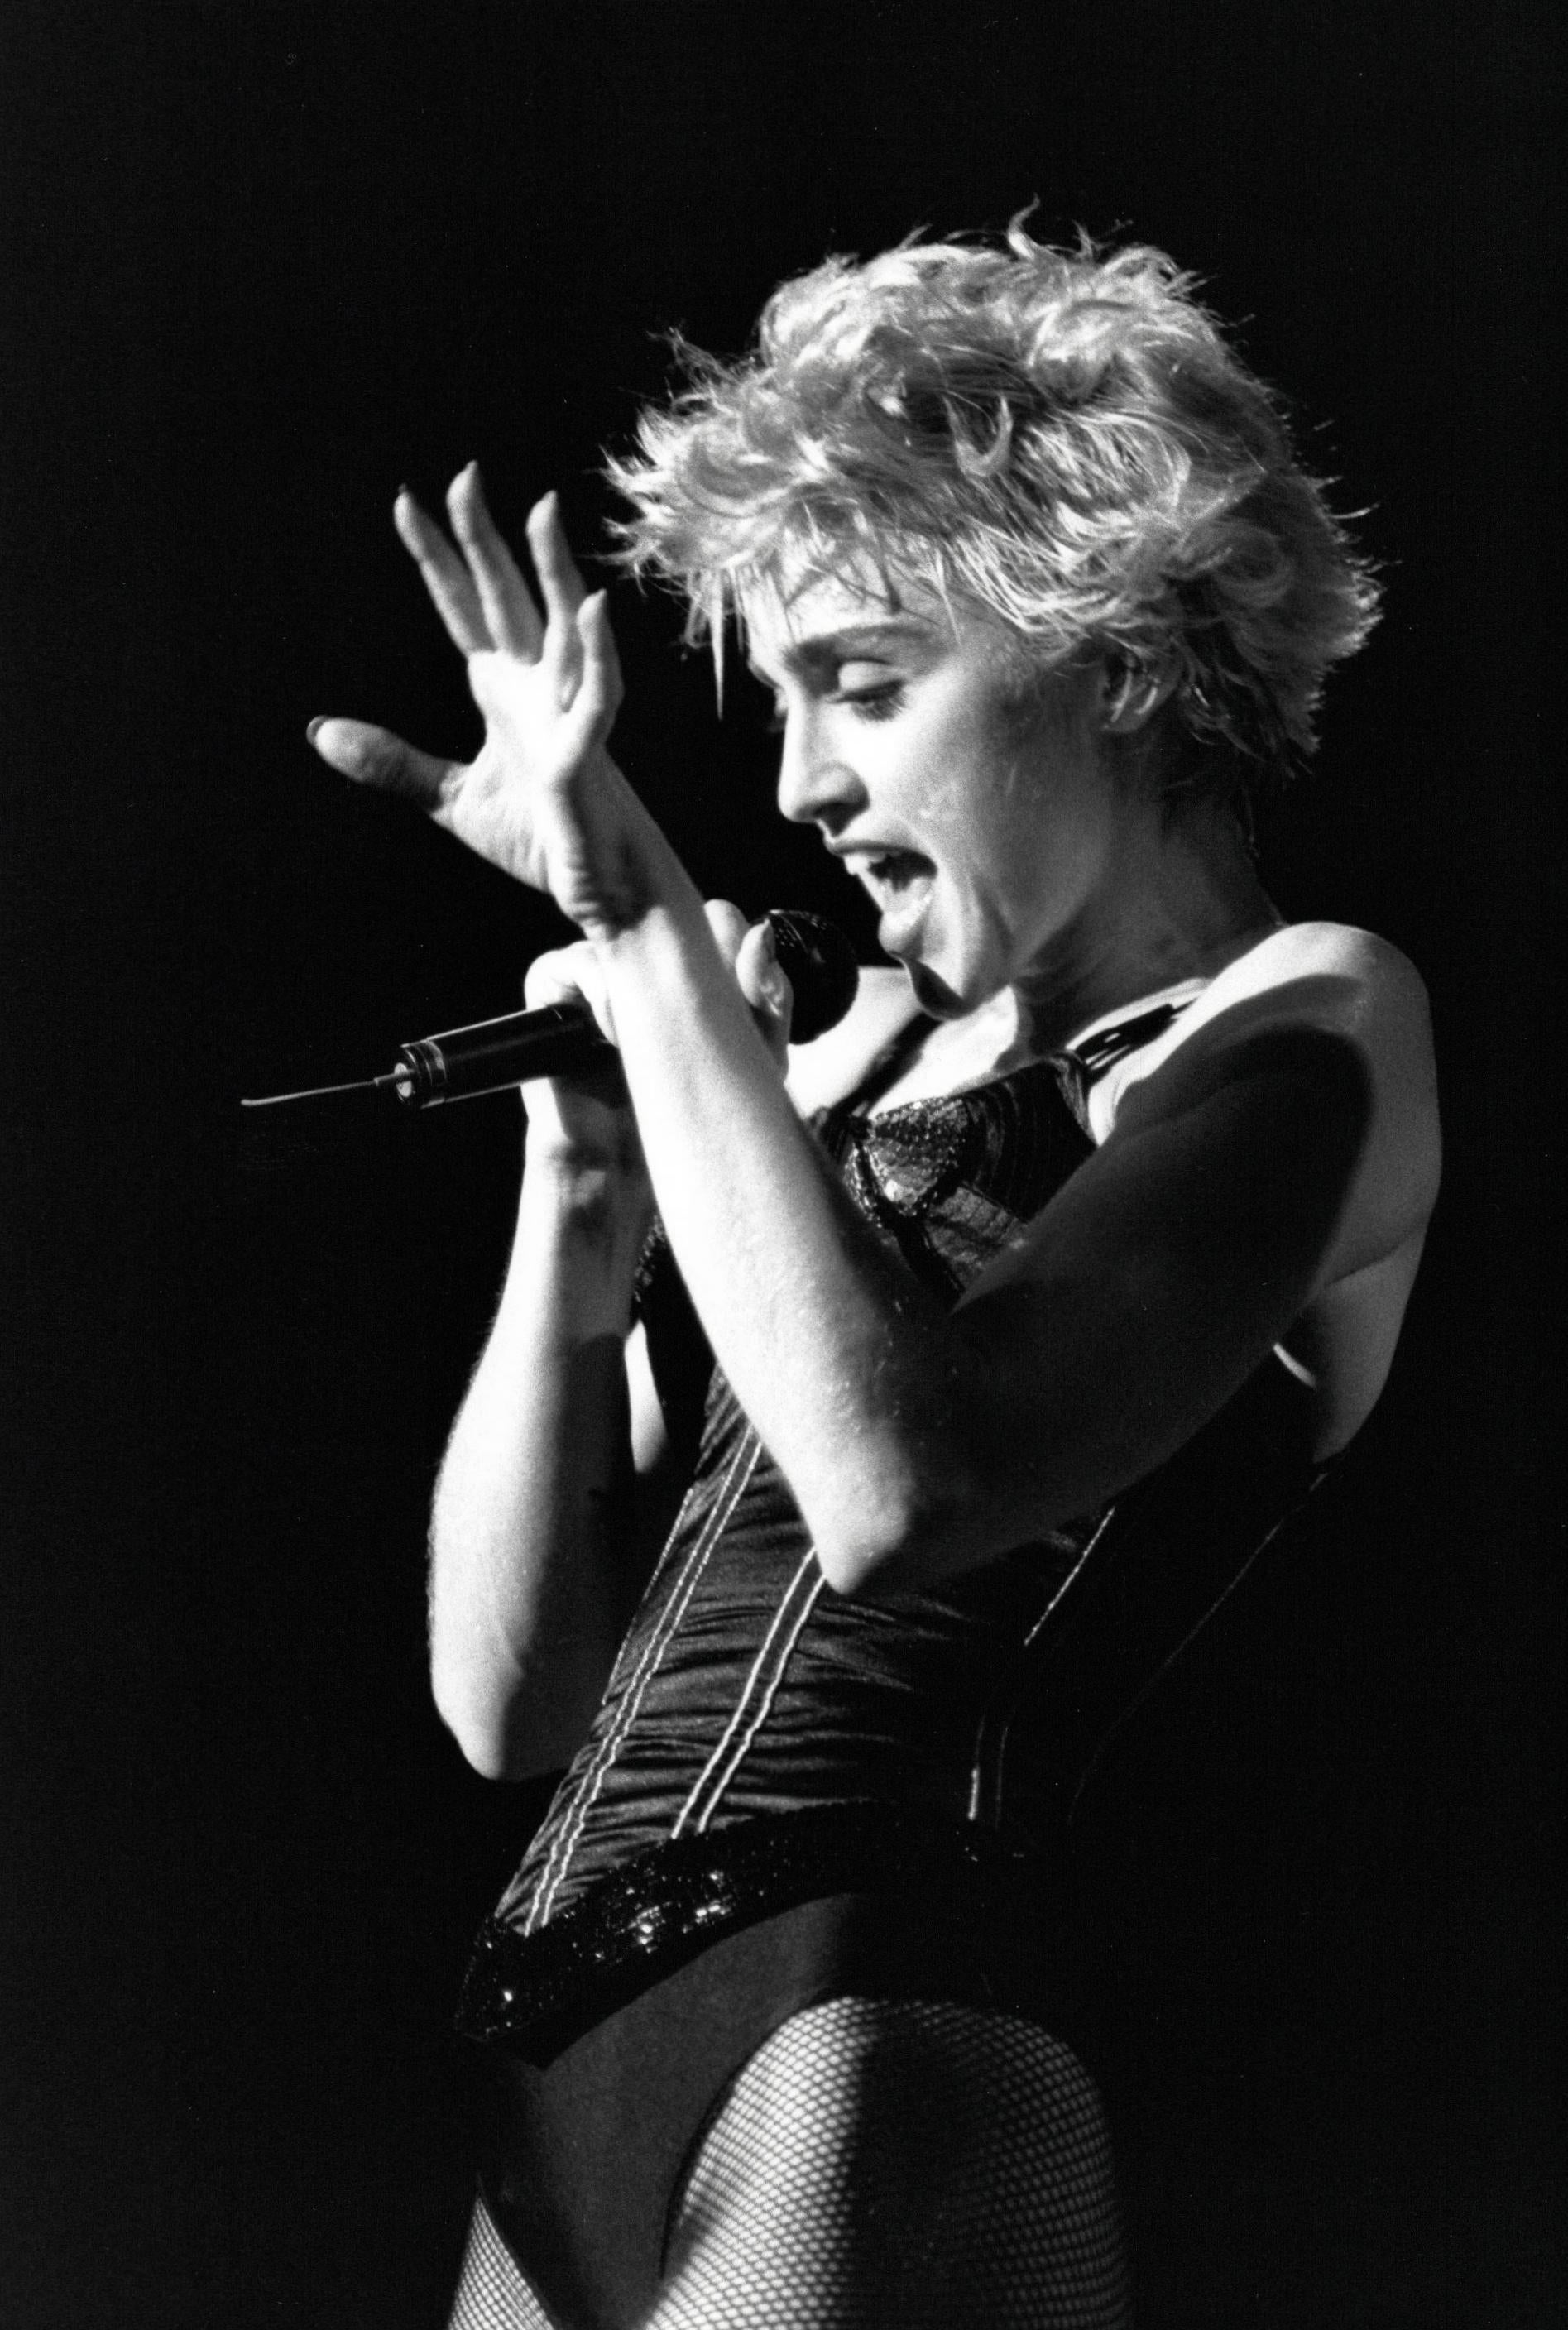 Kevin Mazur Portrait Photograph - Madonna Performing in Bustier Vintage Original Photograph